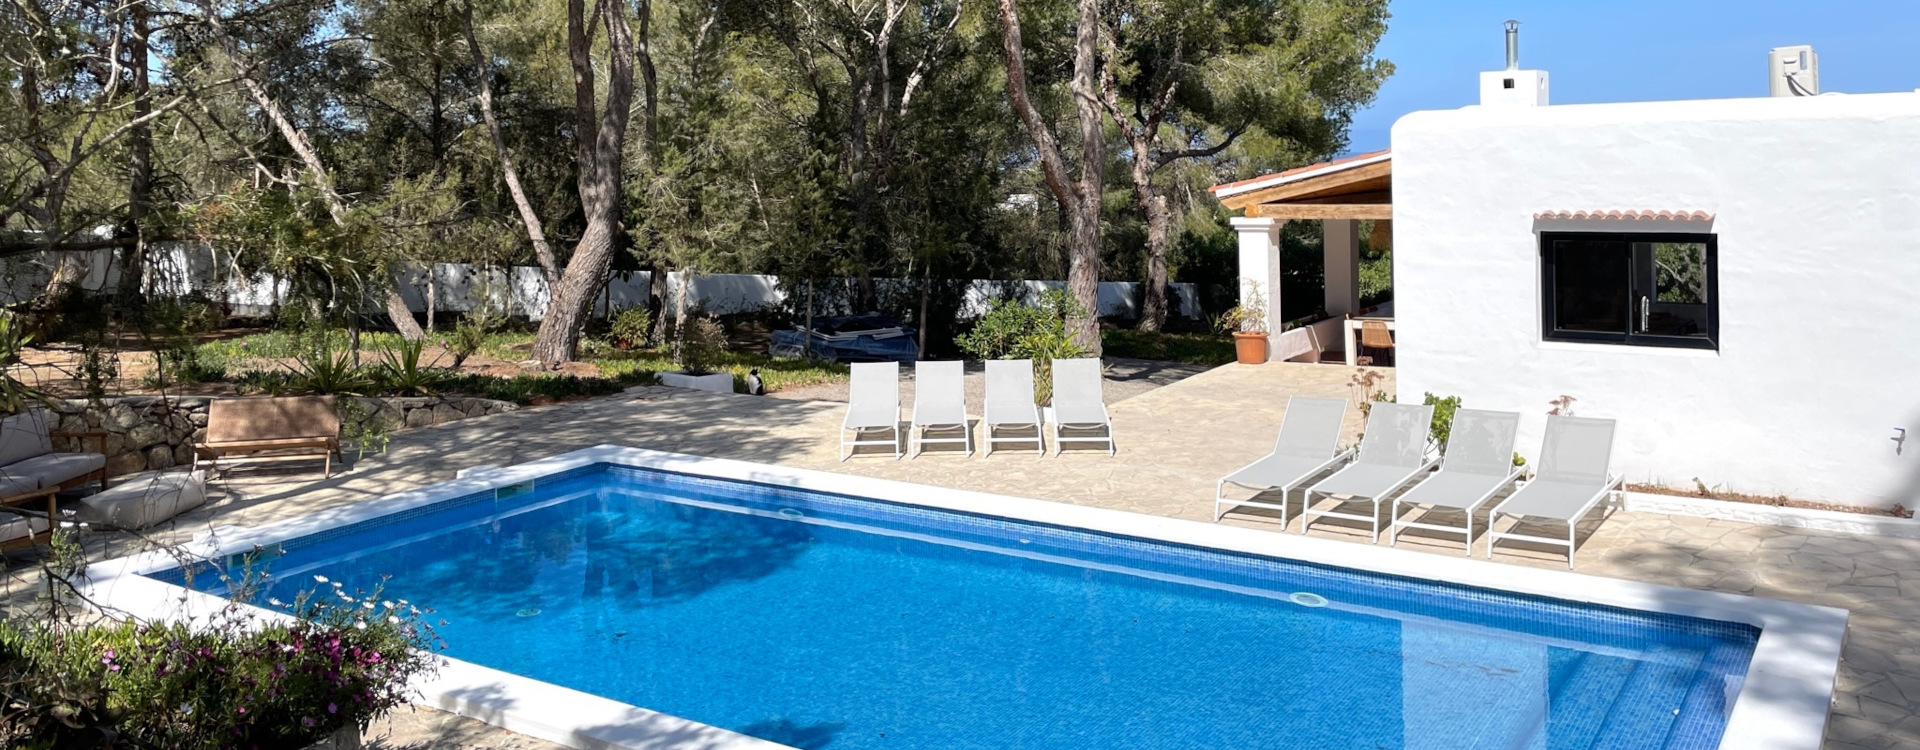 ibiza villa pool